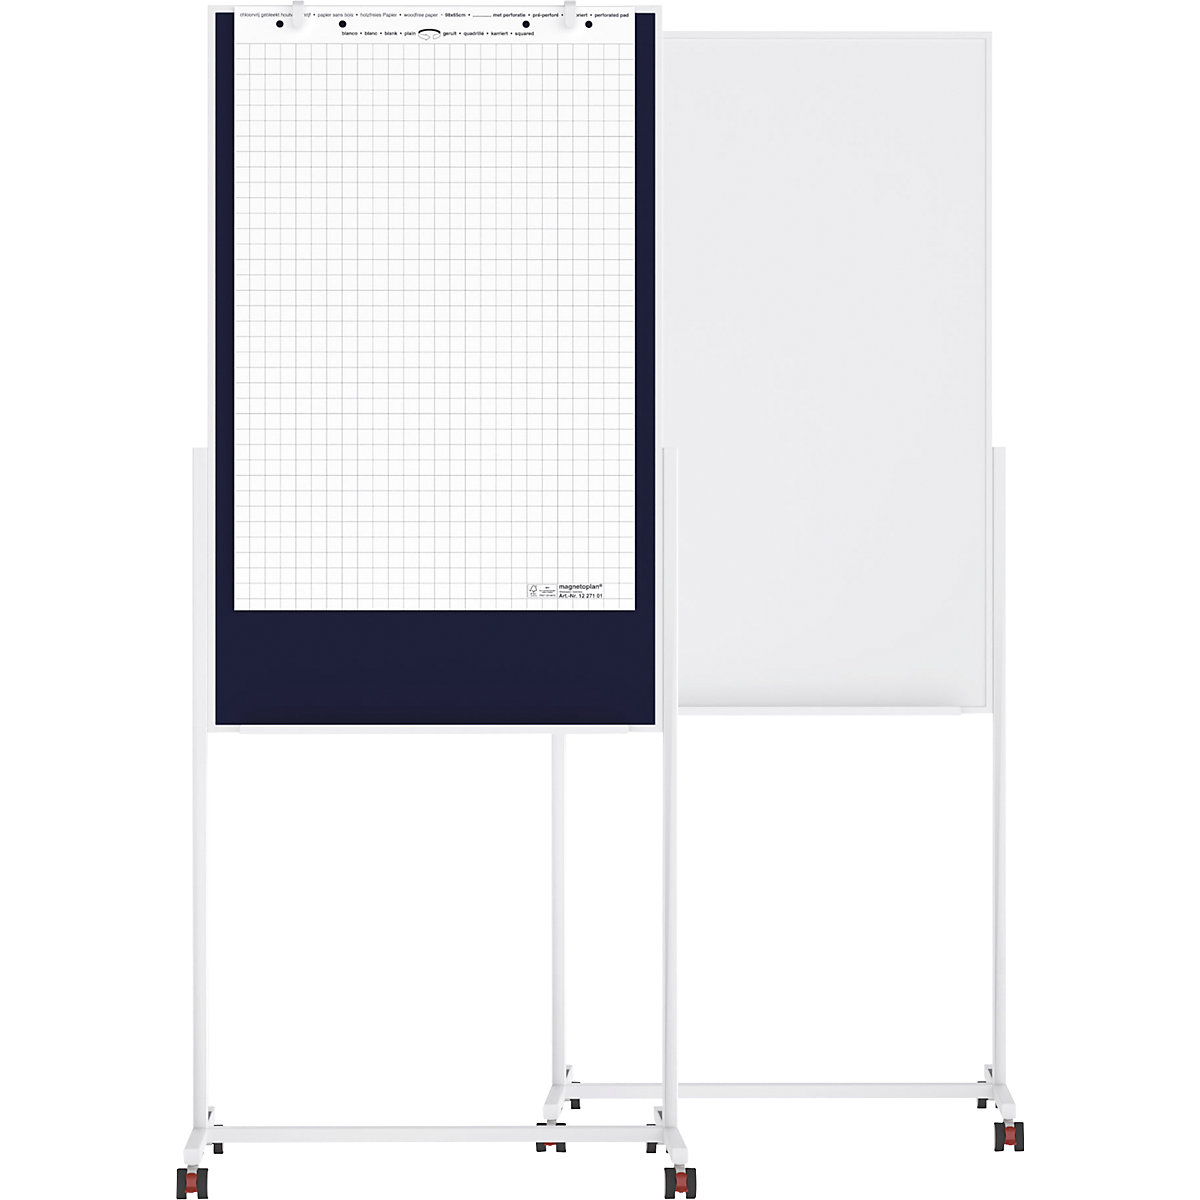 Univerzalna prezentacijska ploča – magnetoplan, format ploče 750 x 1200 mm, bijela ploča / filc u plavoj boji-7